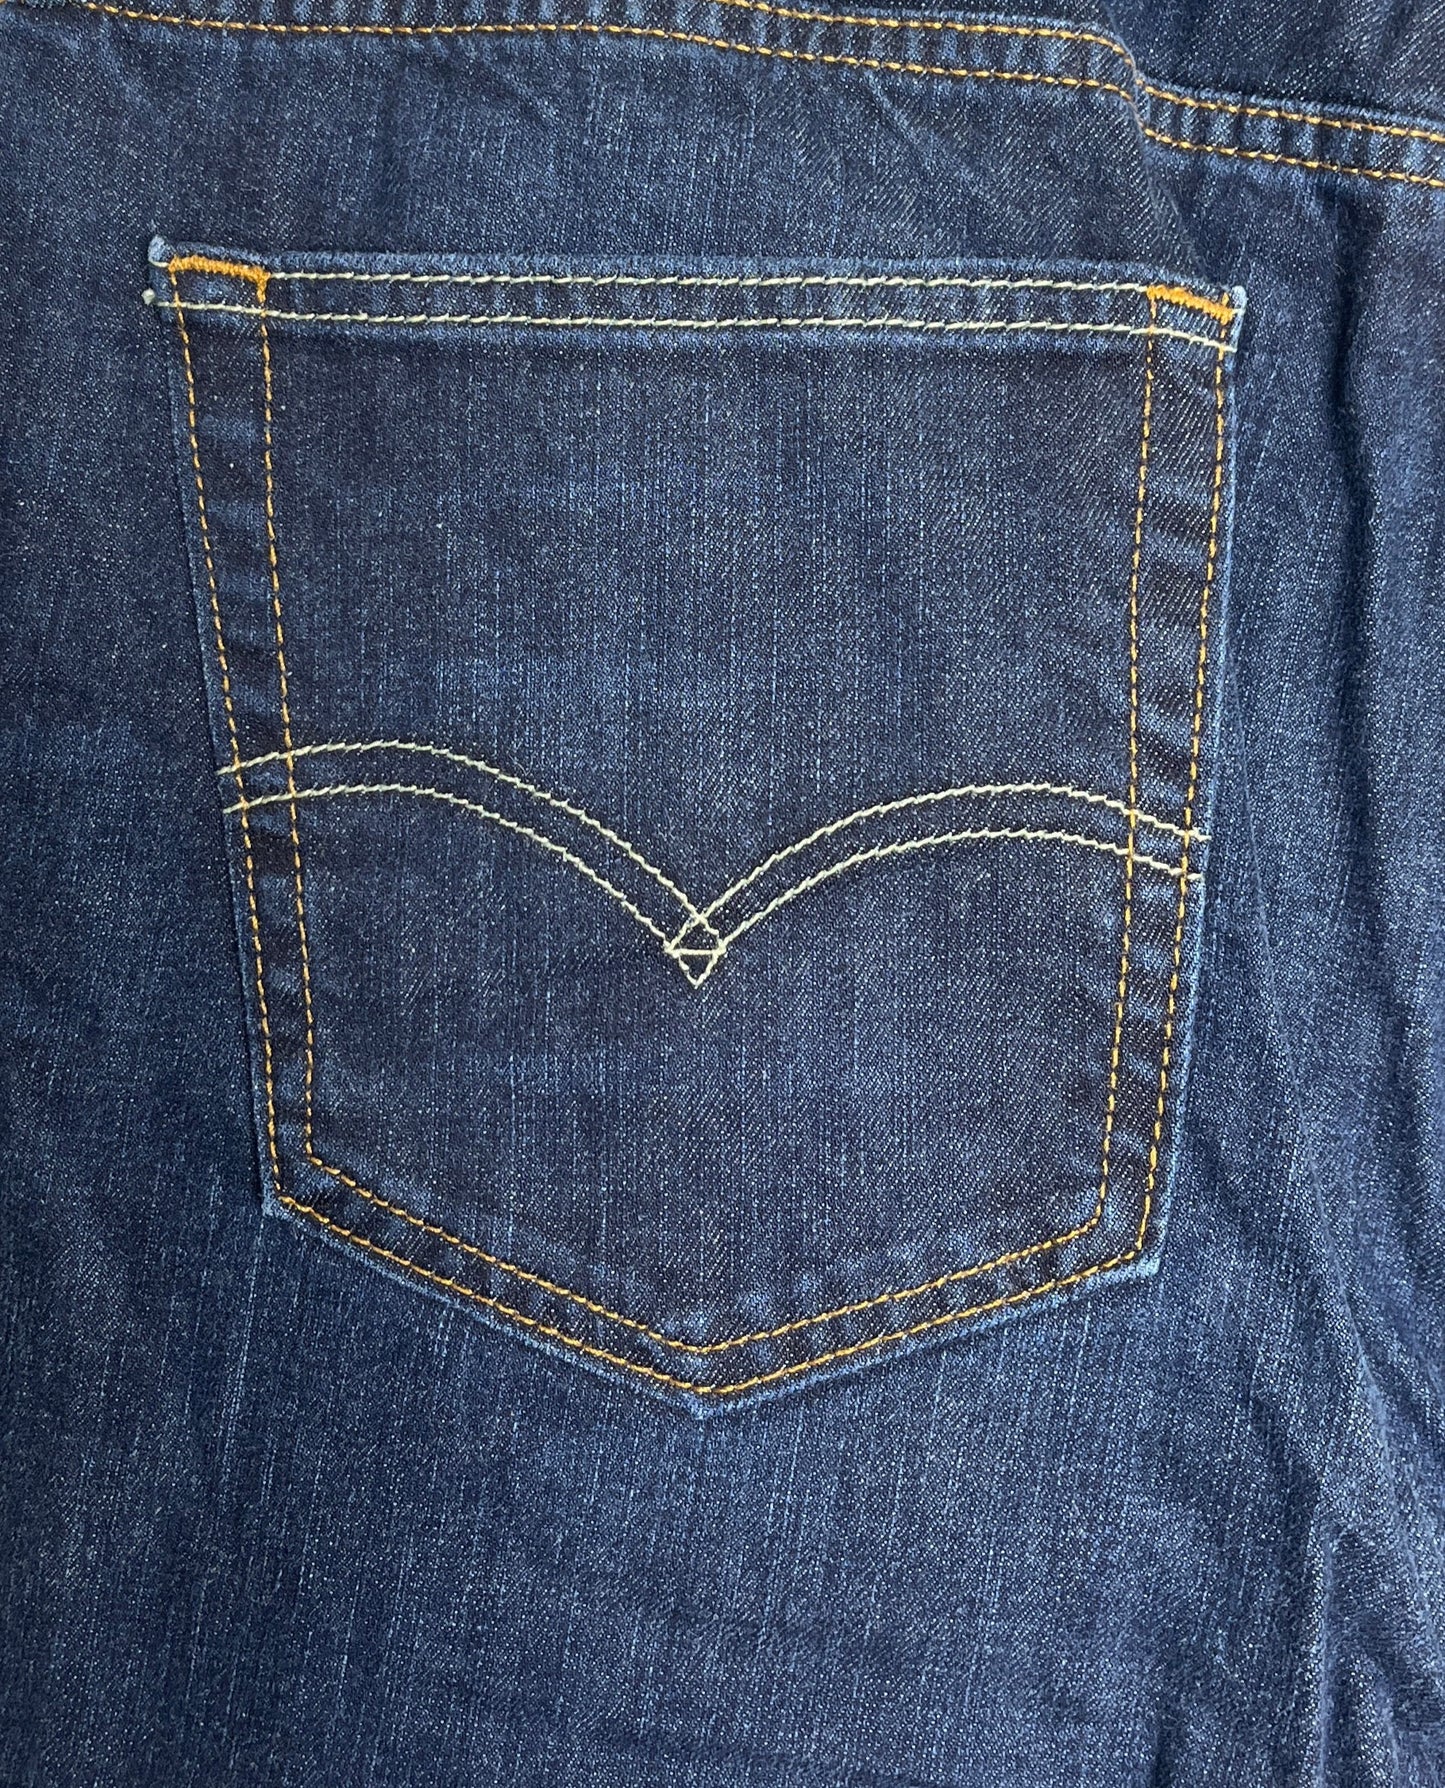 Levi's MEN'S Denim Jeans Dark Blue Size 40x34 SKU 000446